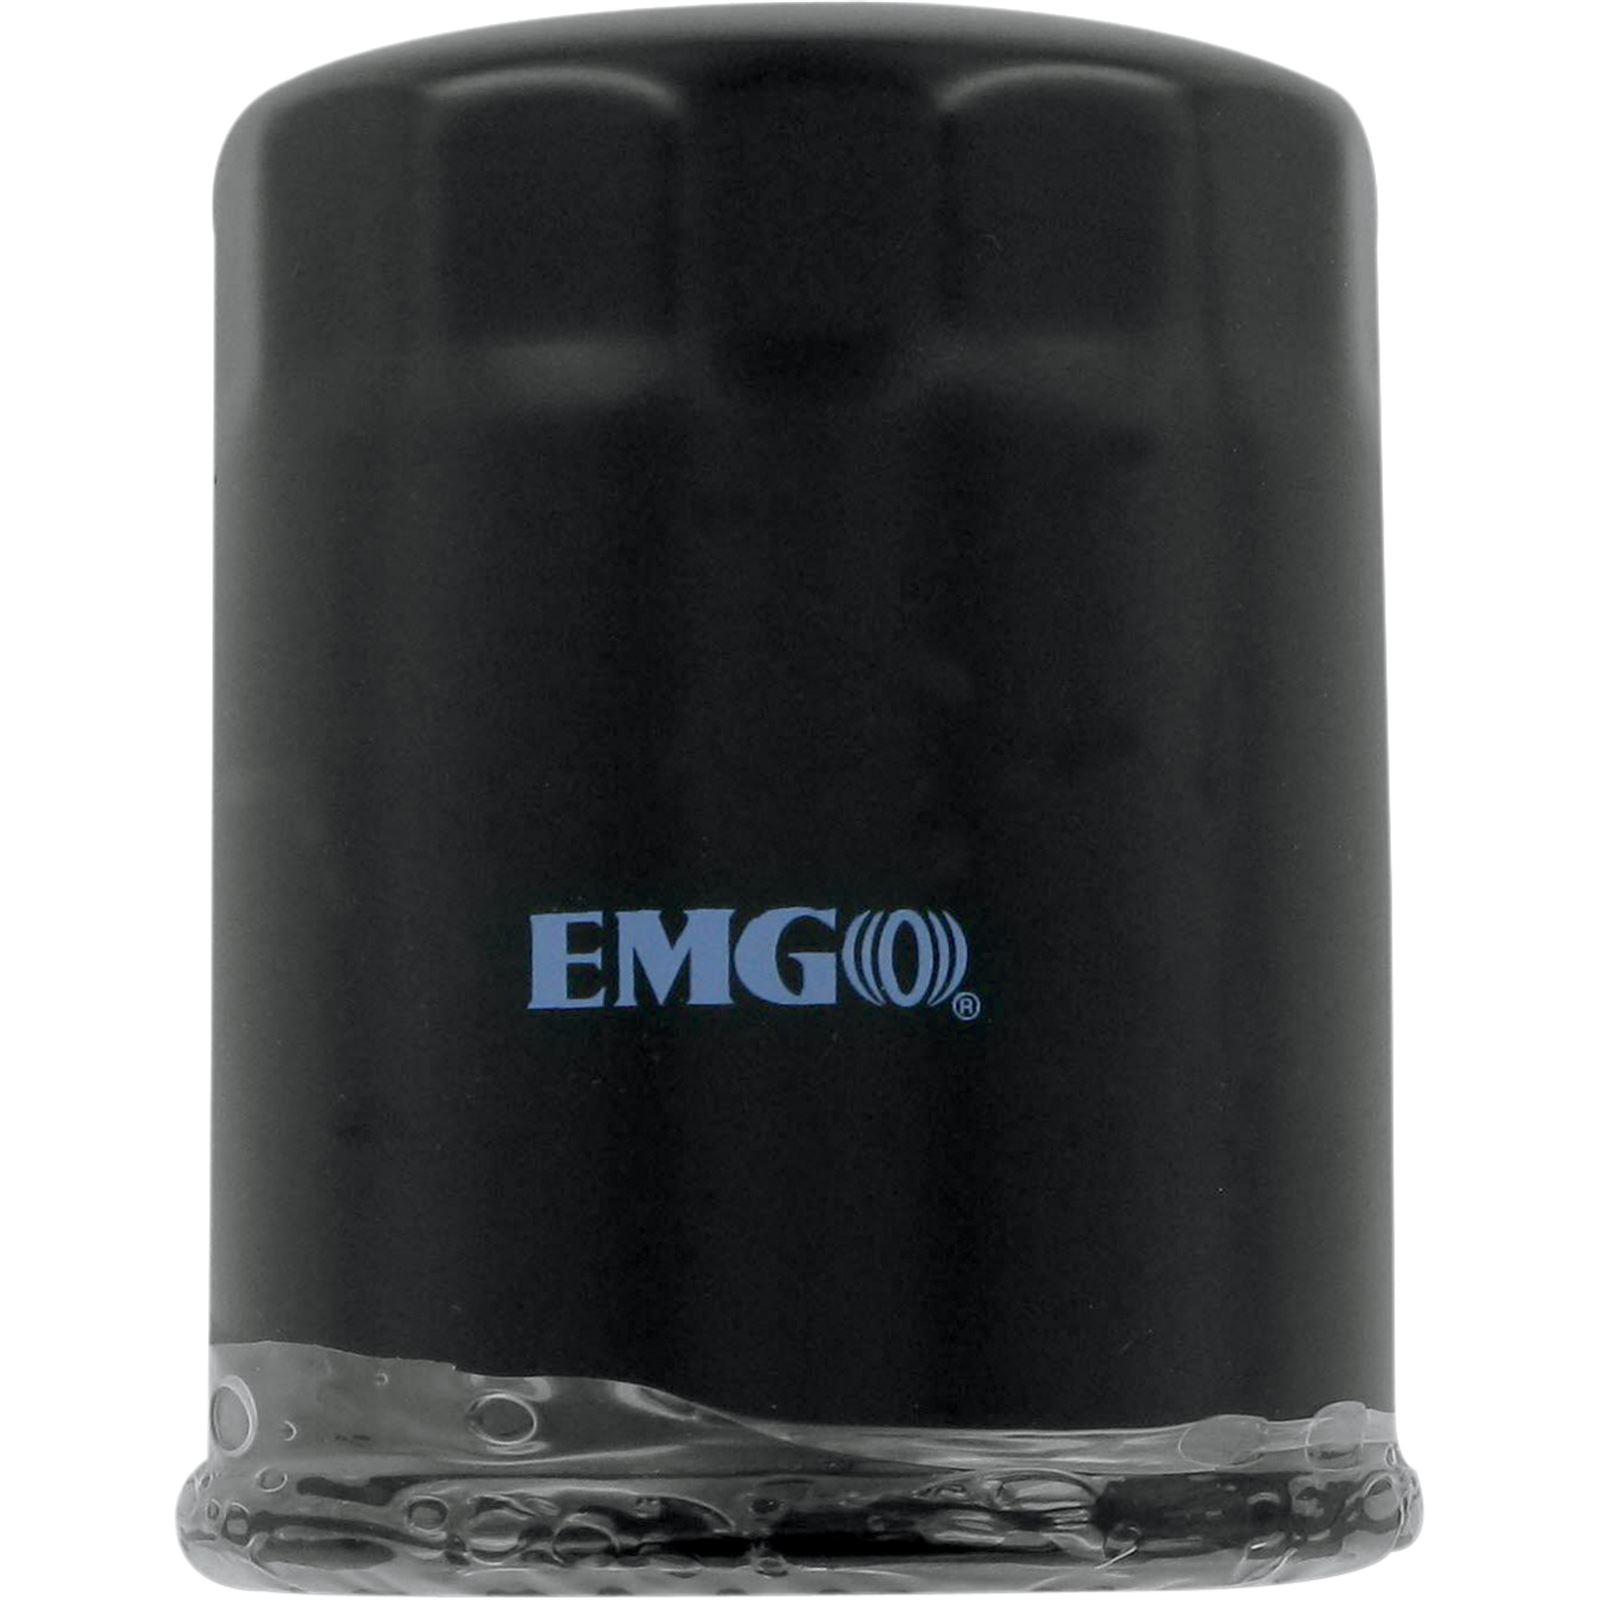 Emgo Oil Filter - for Yamaha